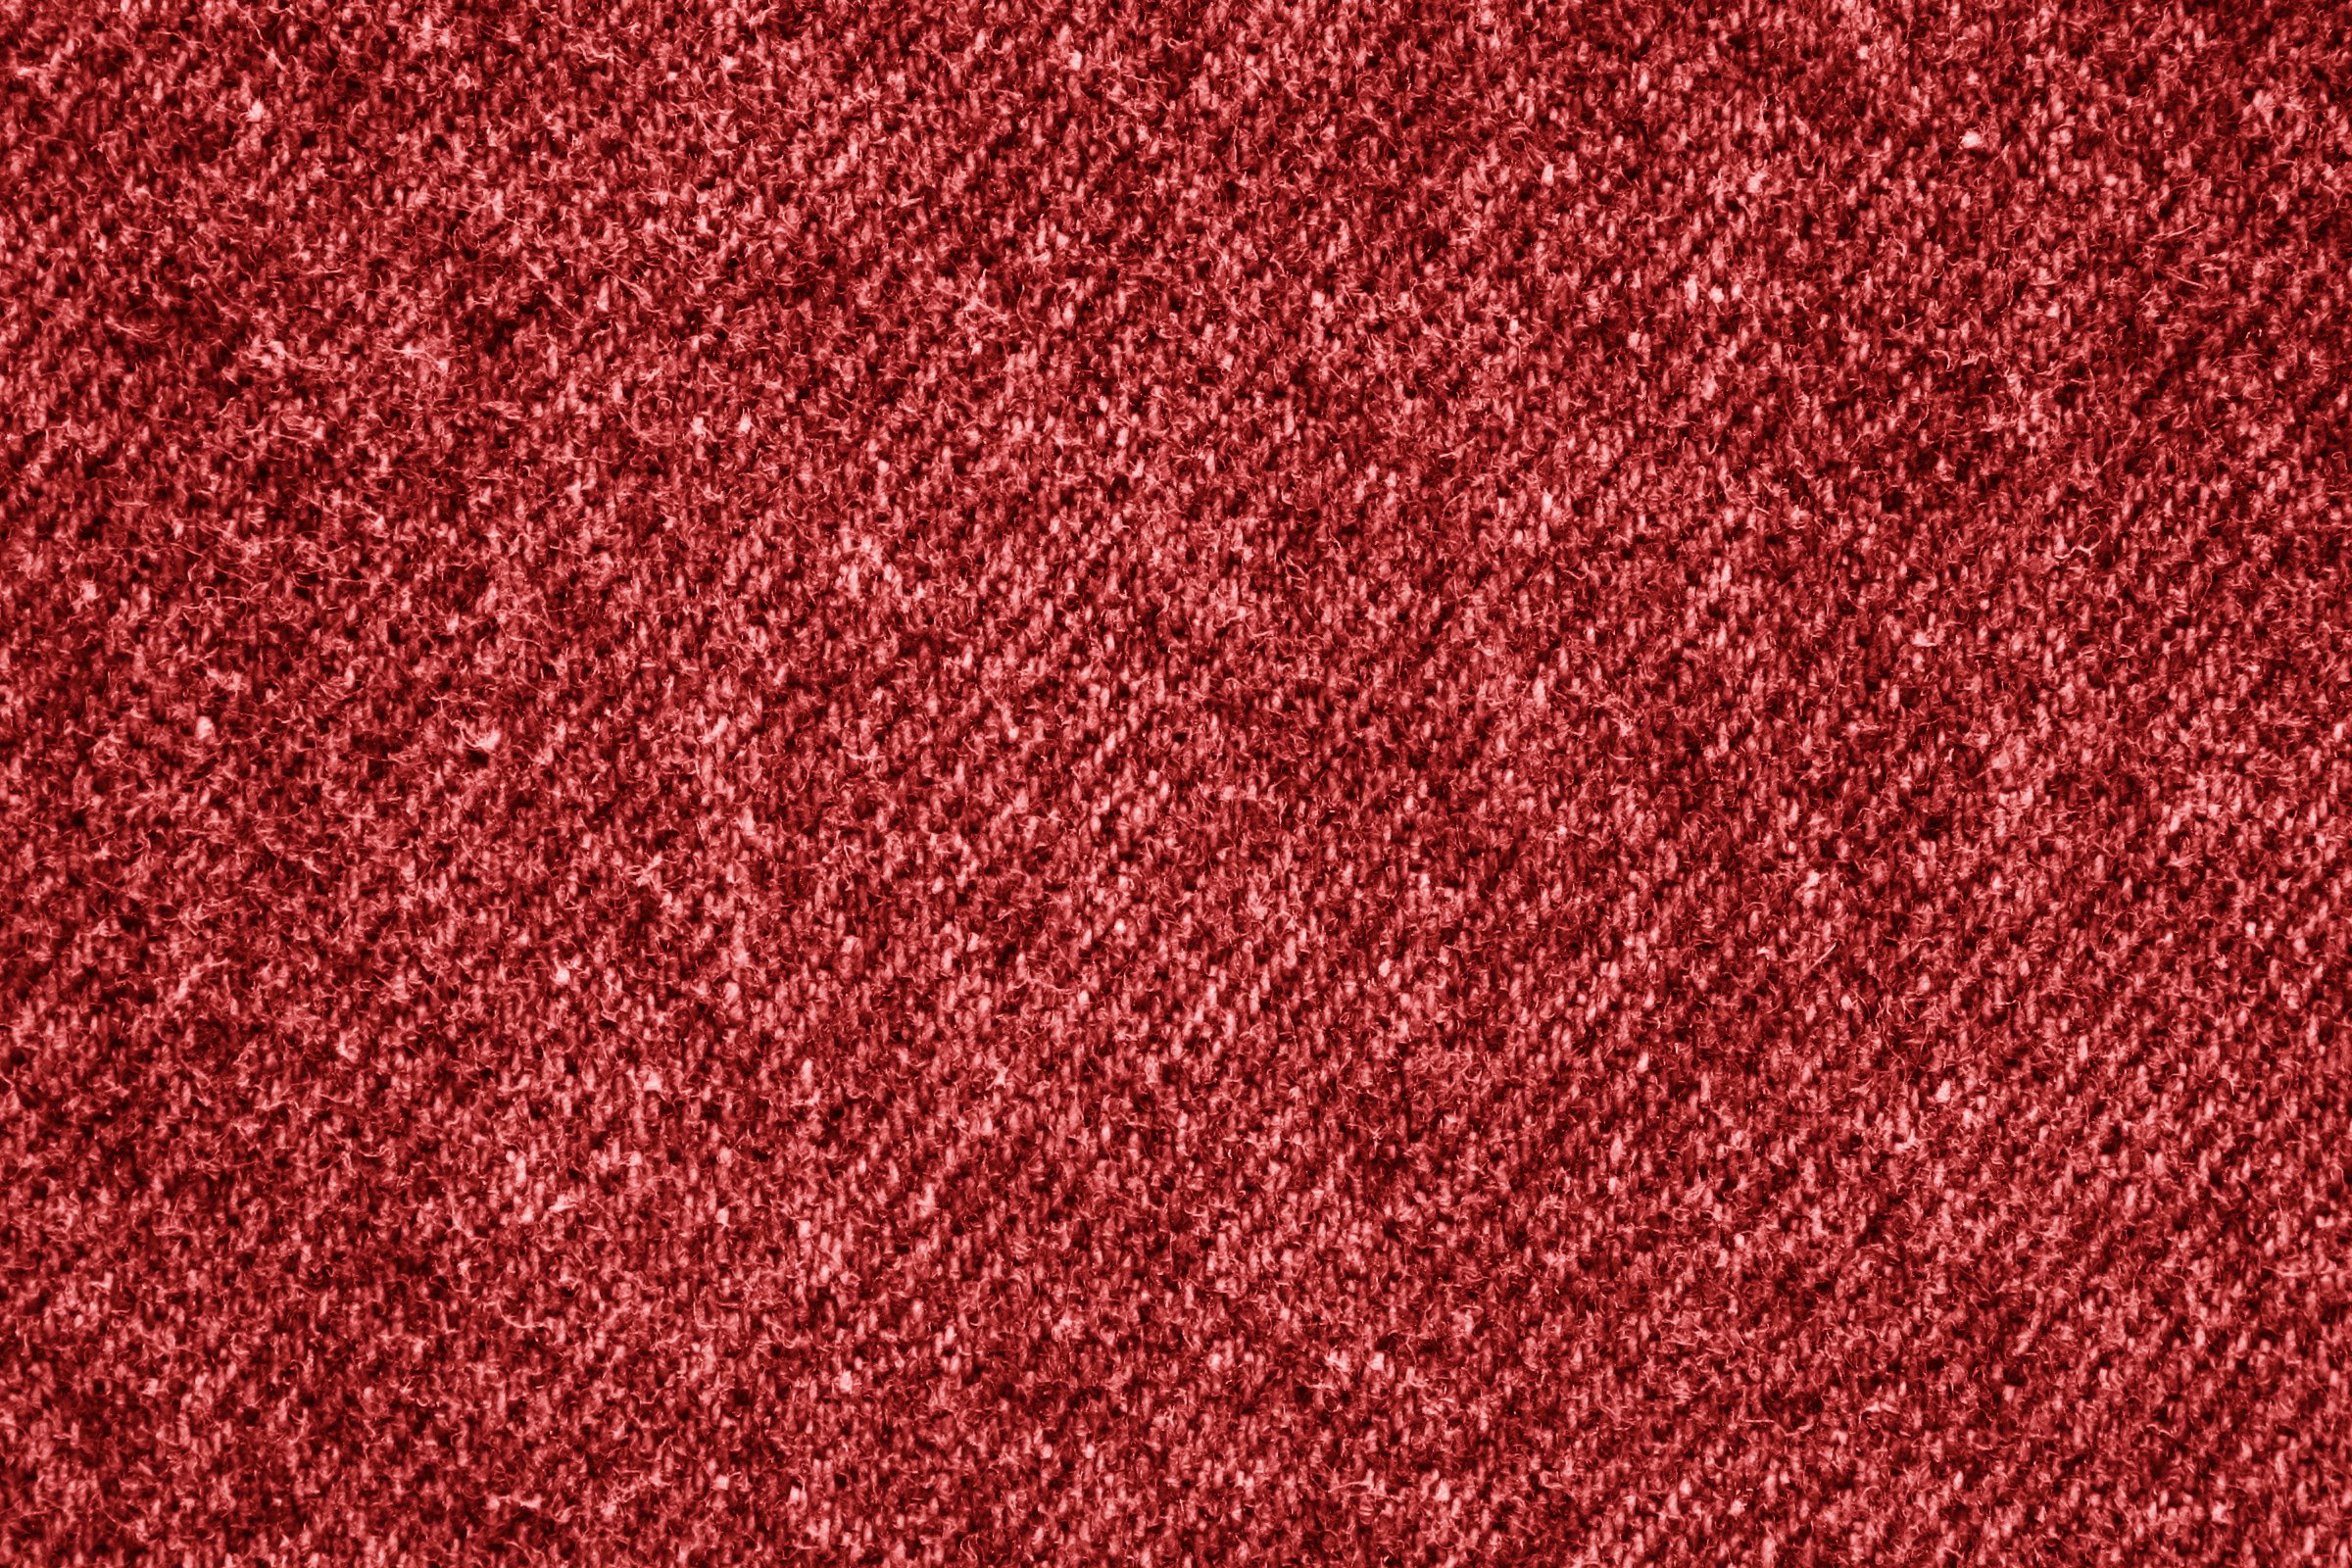 Red Denim Fabric Texture Picture Photograph Photos Public